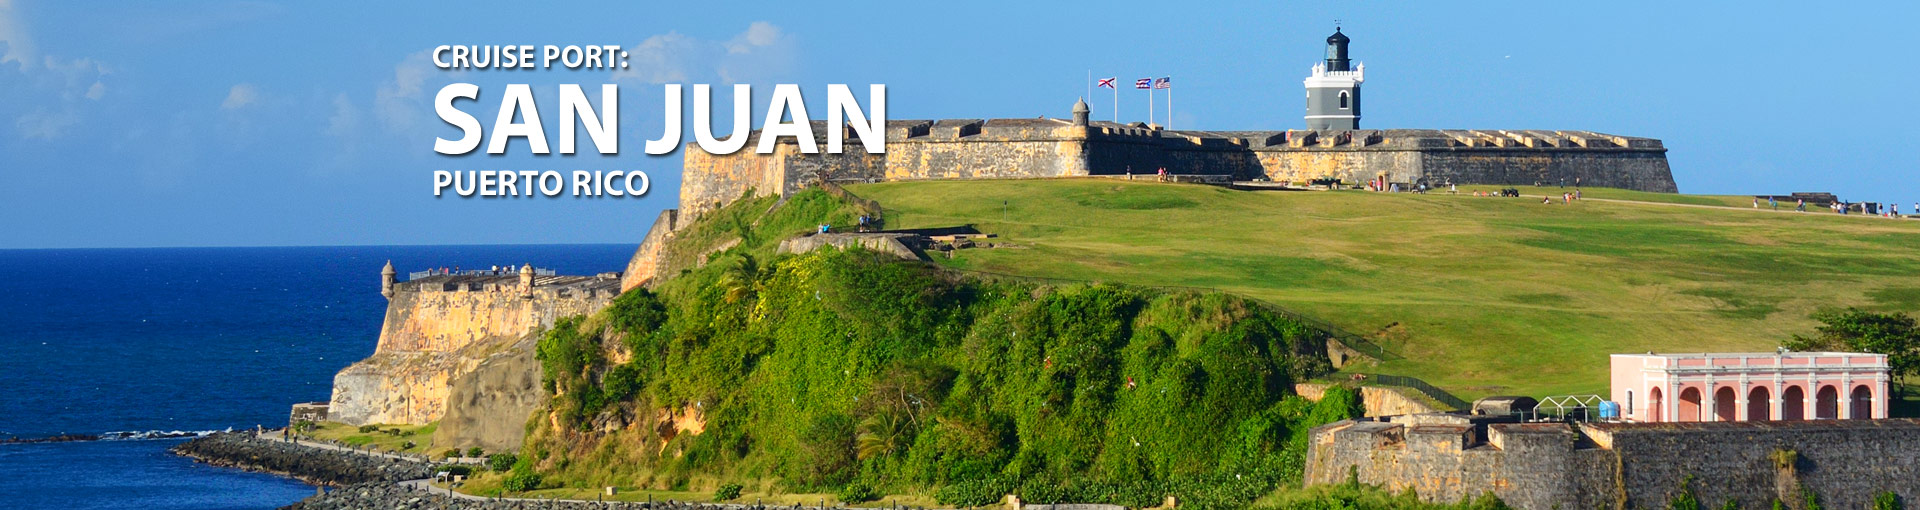 San Juan, Puerto Rico Cruise Port, 2017 and 2018 Cruises from San Juan